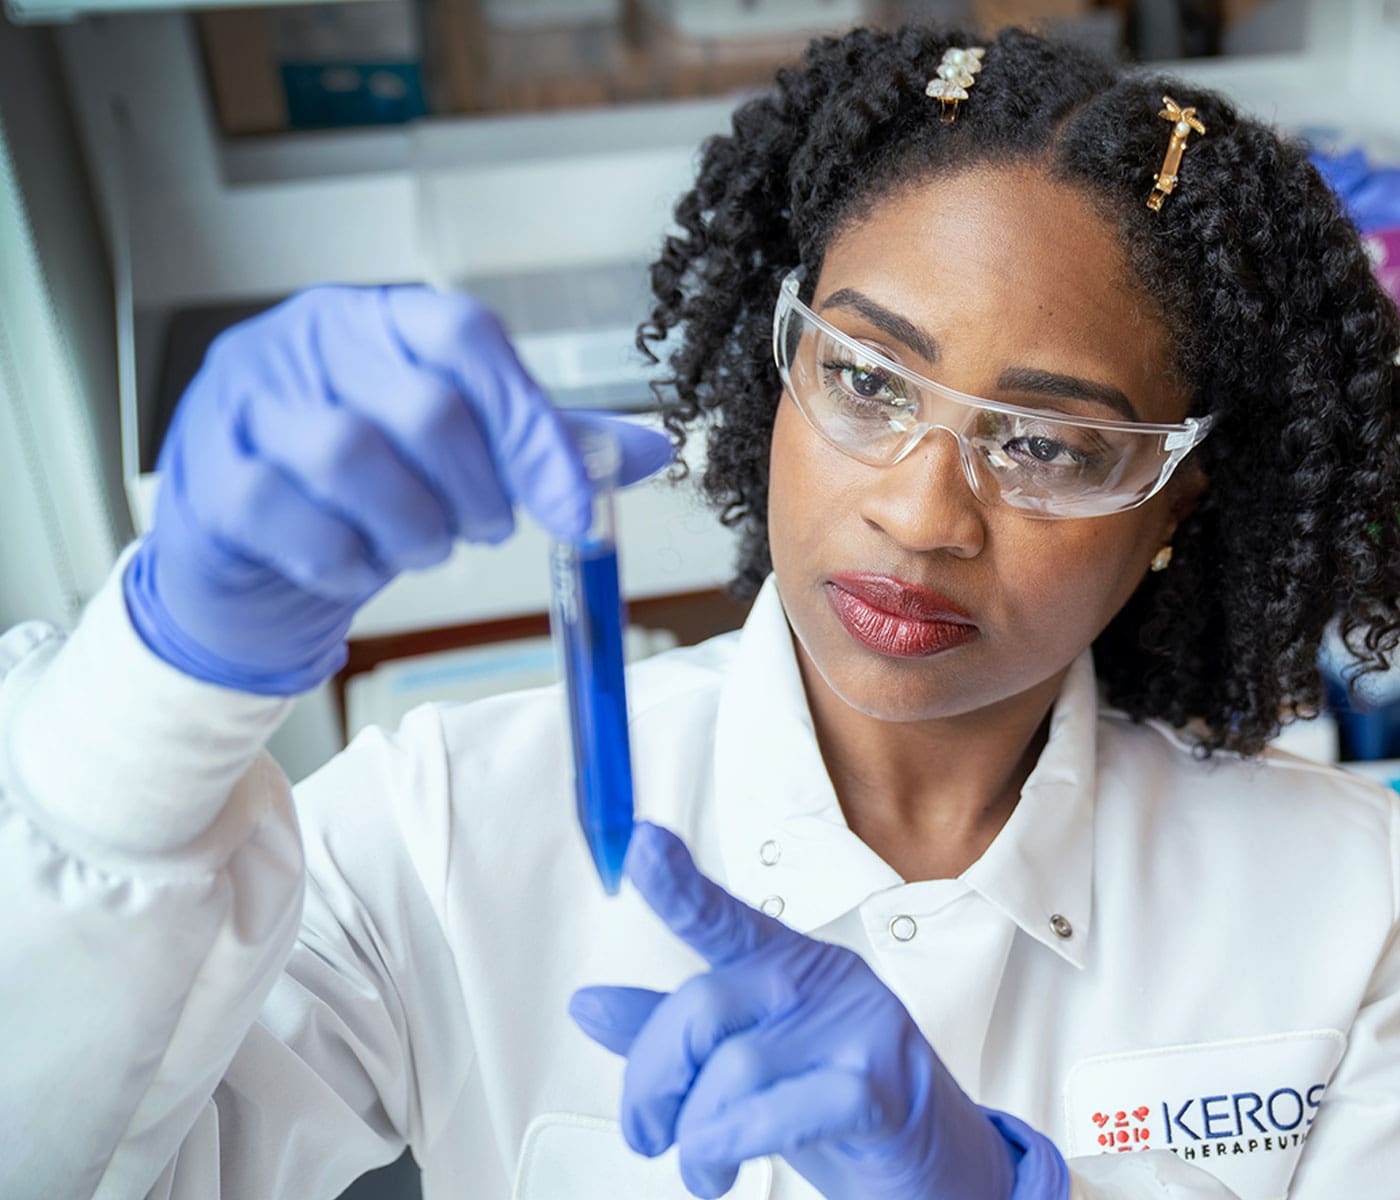 Female Keros Therapeutics scientist in a lab inspecting a vial of blue liquid